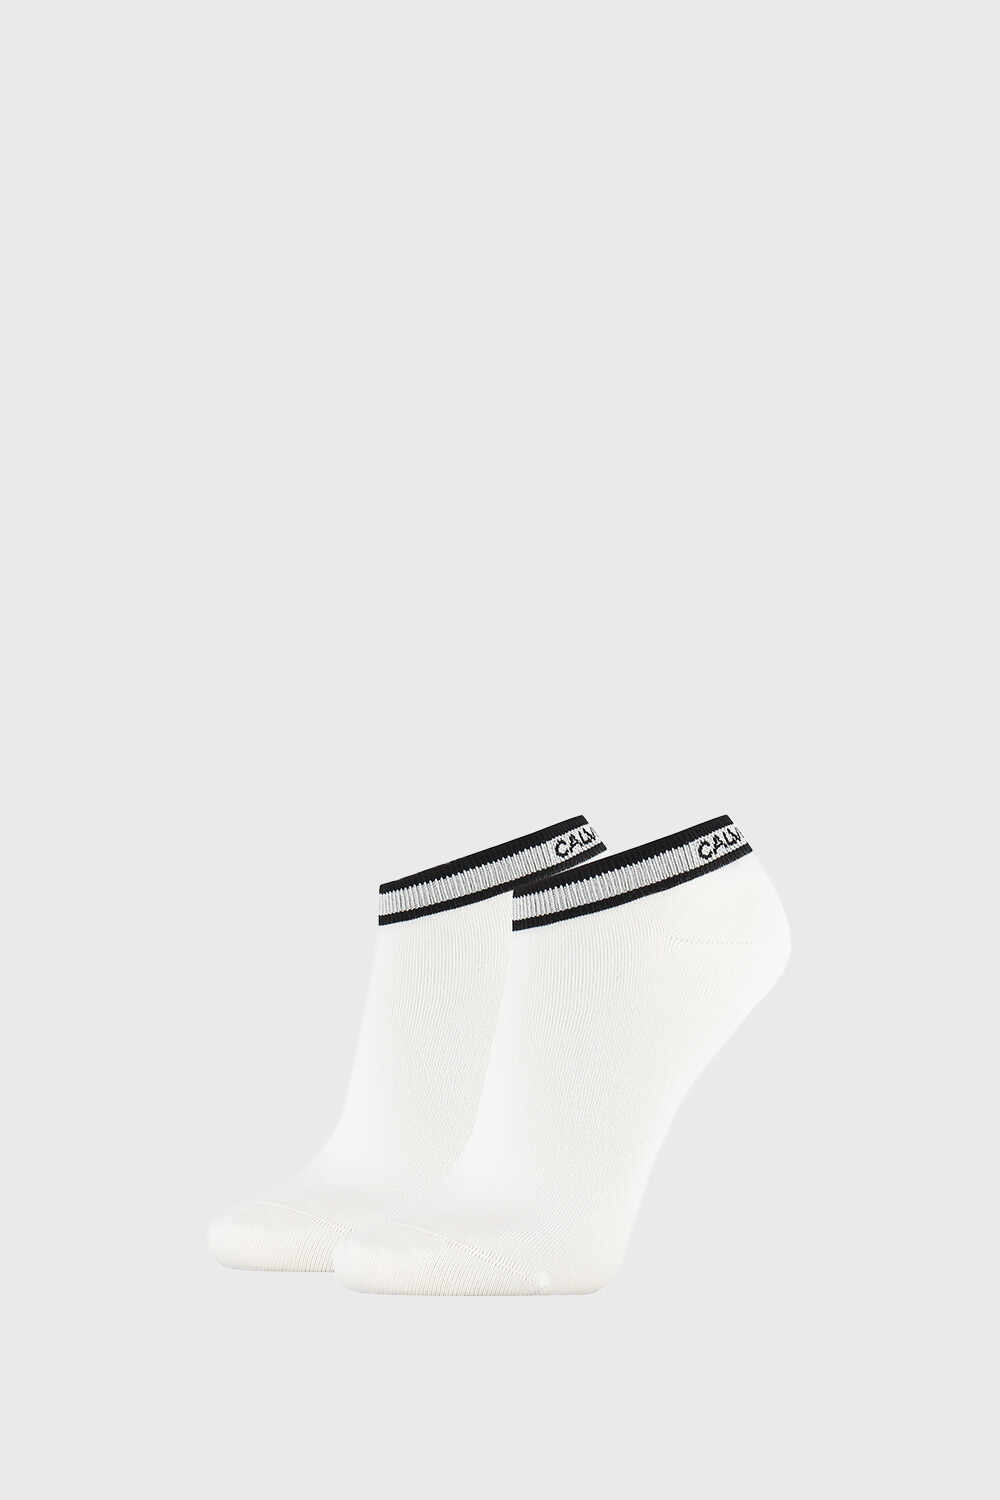 2 PACK șosete damă Calvin Klein Spencer, alb